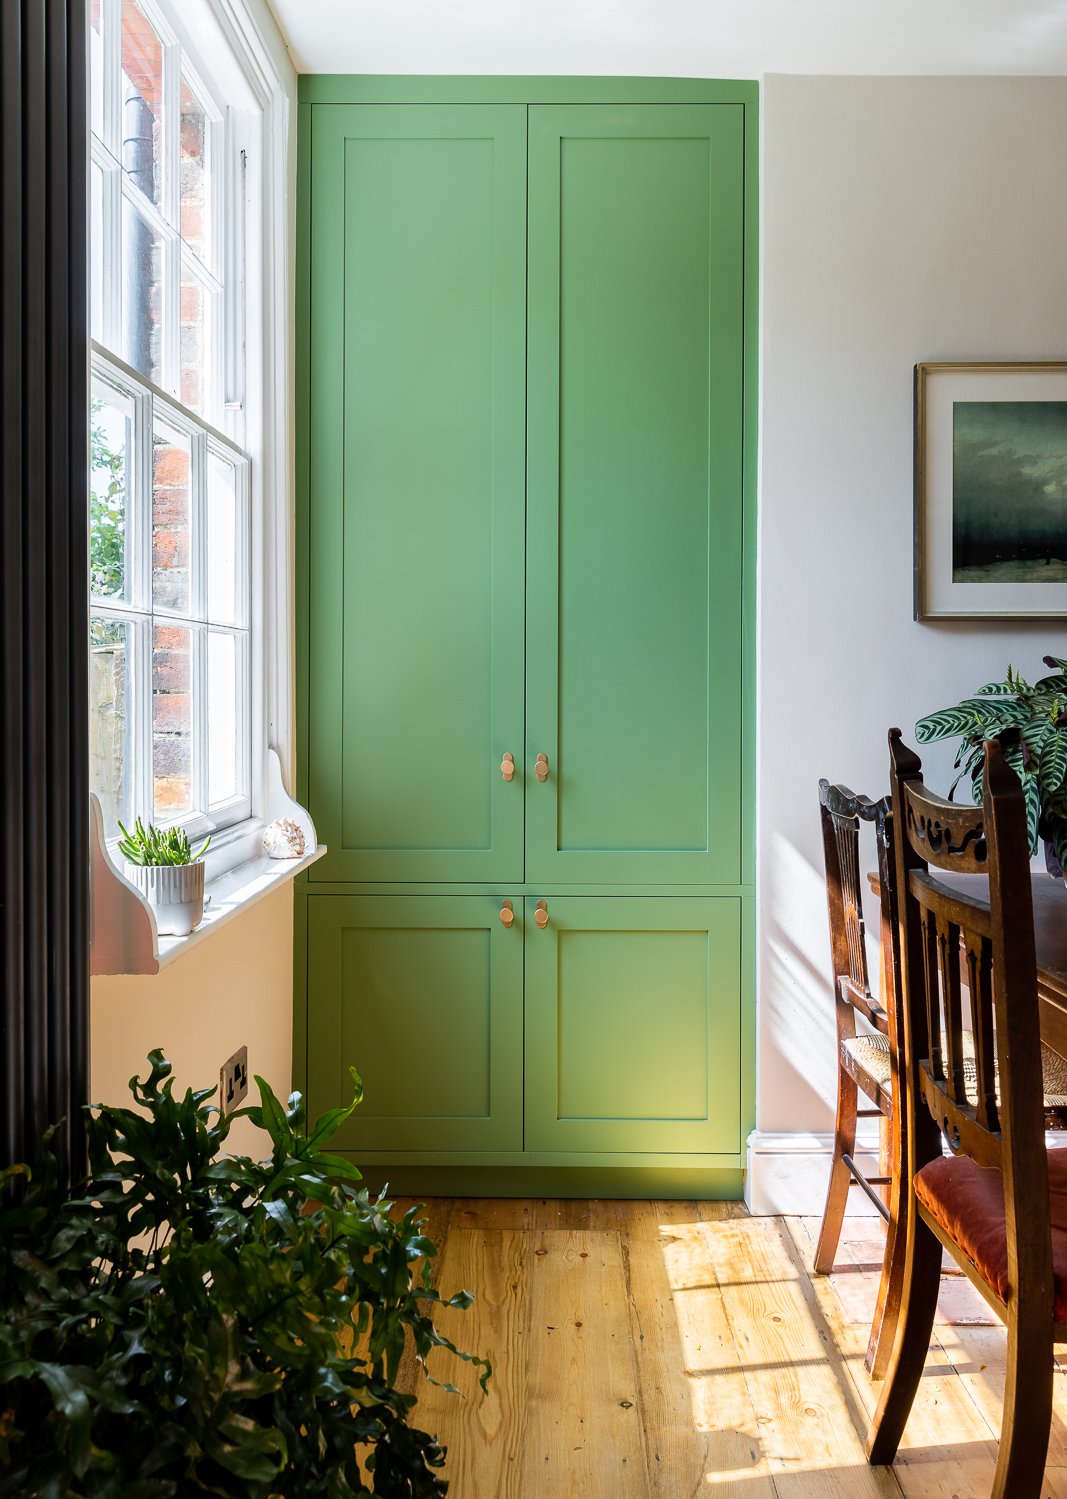 CharlotteBucciero-interiors-green-storage-cupboard-bespoke-wardrobe-brass-handles.jpg